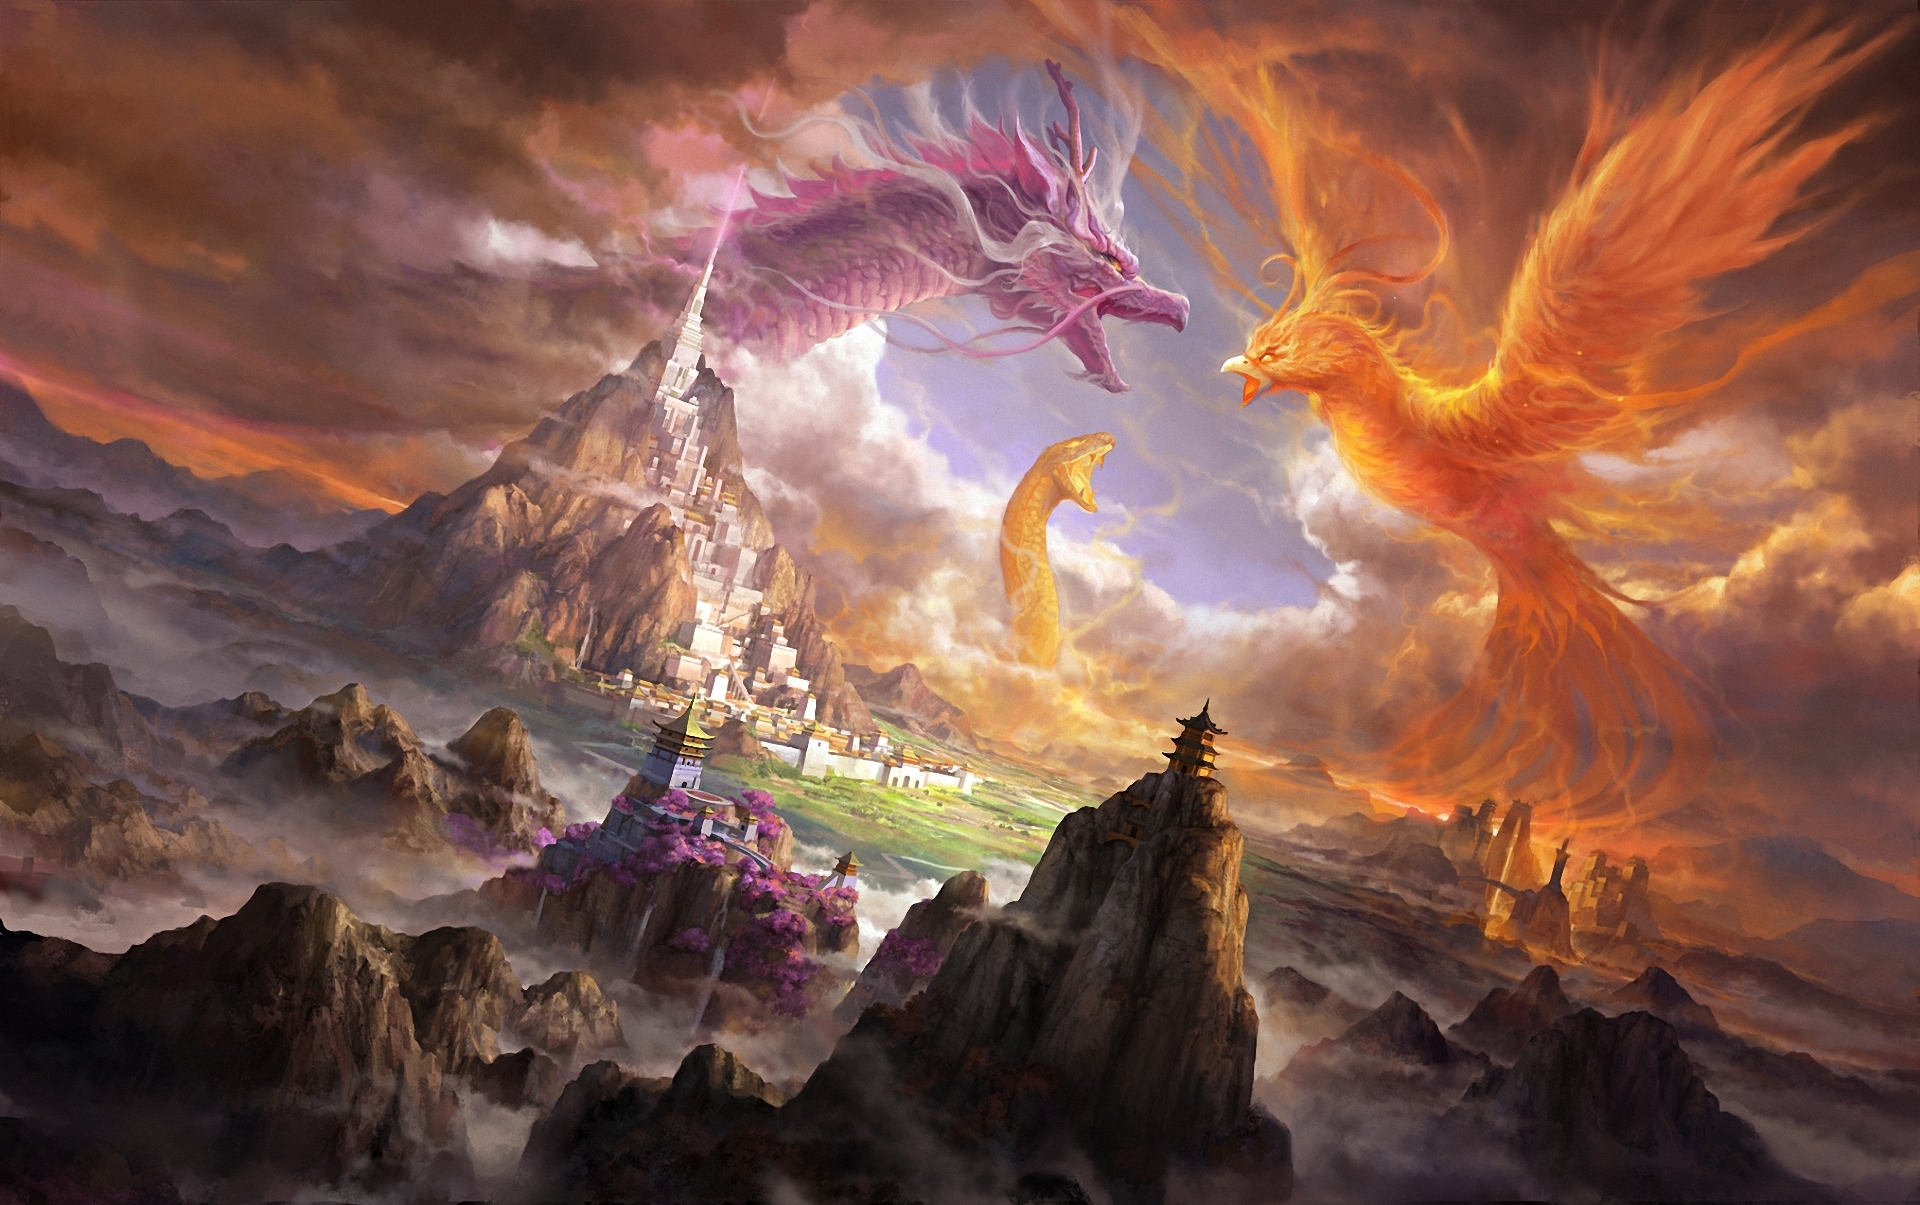 Giant dragon, phoenix and snake battling by molybdenumgp03